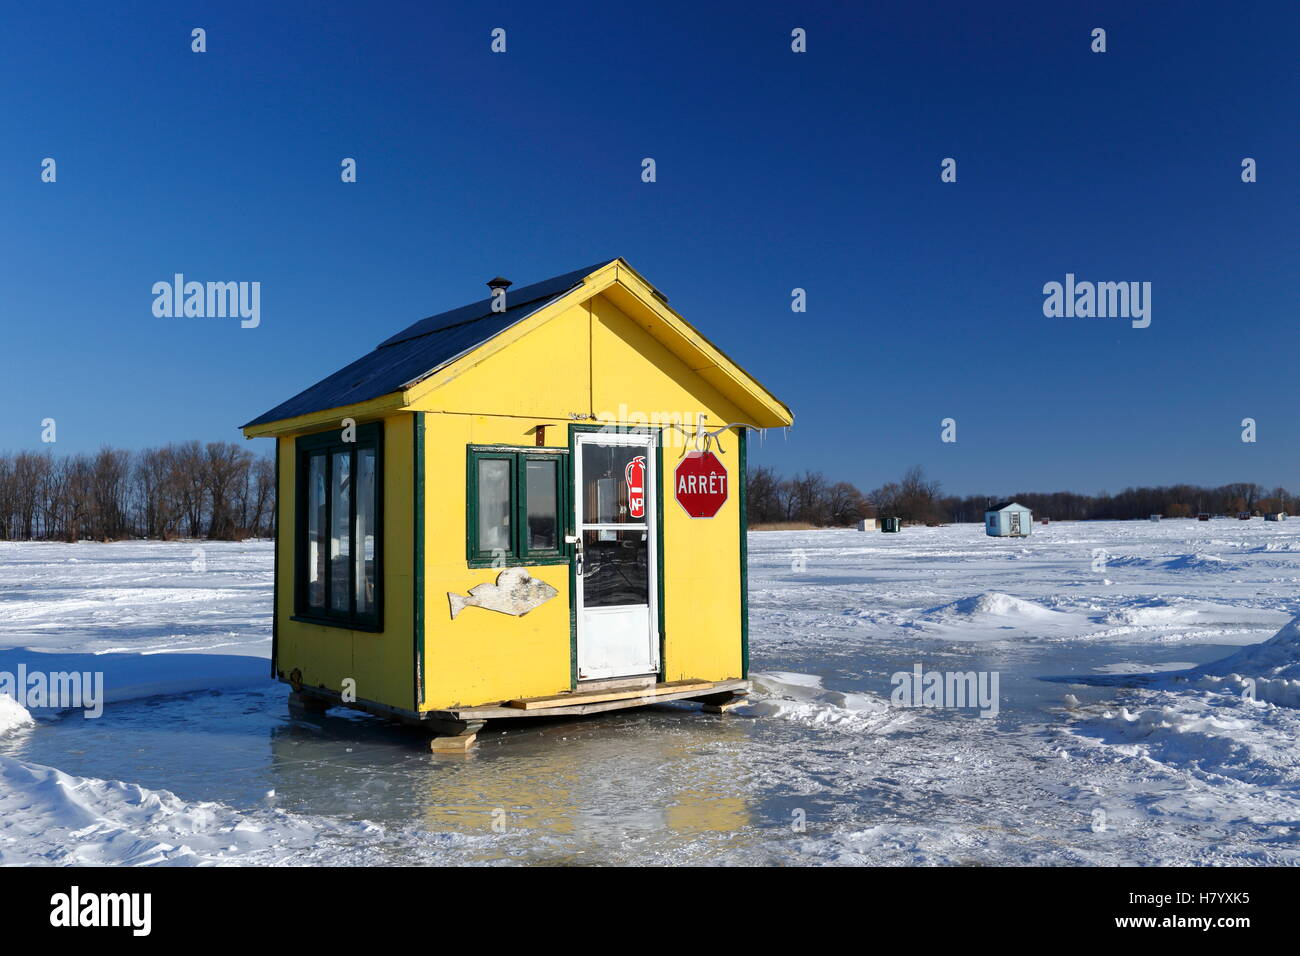 https://c8.alamy.com/comp/H7YXK5/ice-fishing-cabin-on-frozen-saint-lawrence-river-maple-grove-quebec-H7YXK5.jpg